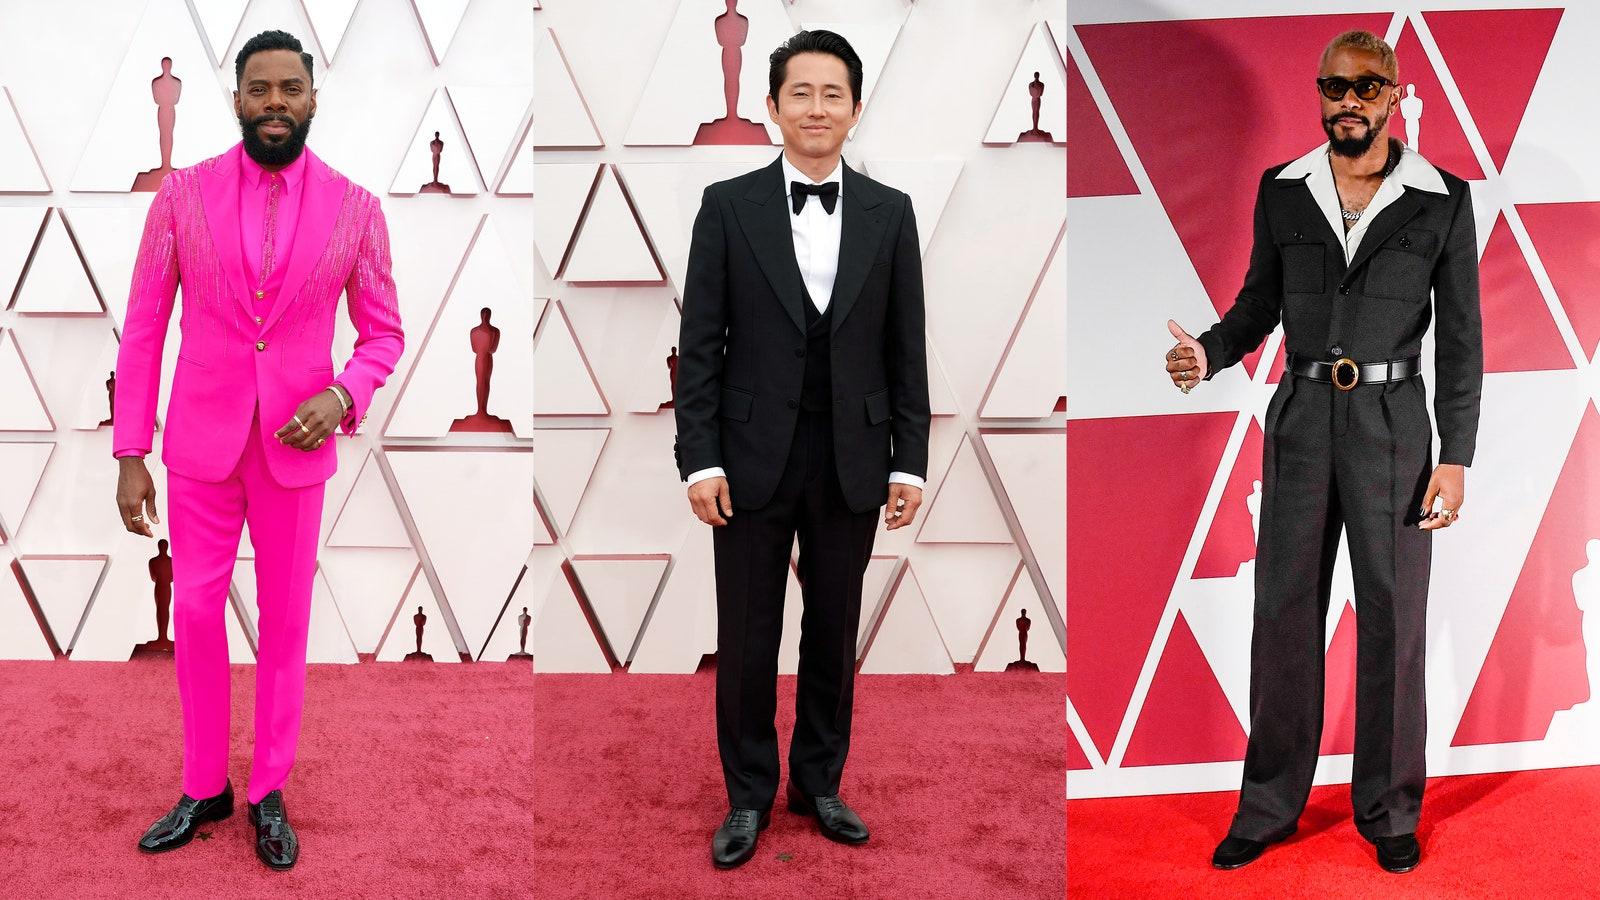 Oscars 2021 Red Carpet Fashion: The Best Dressed Men